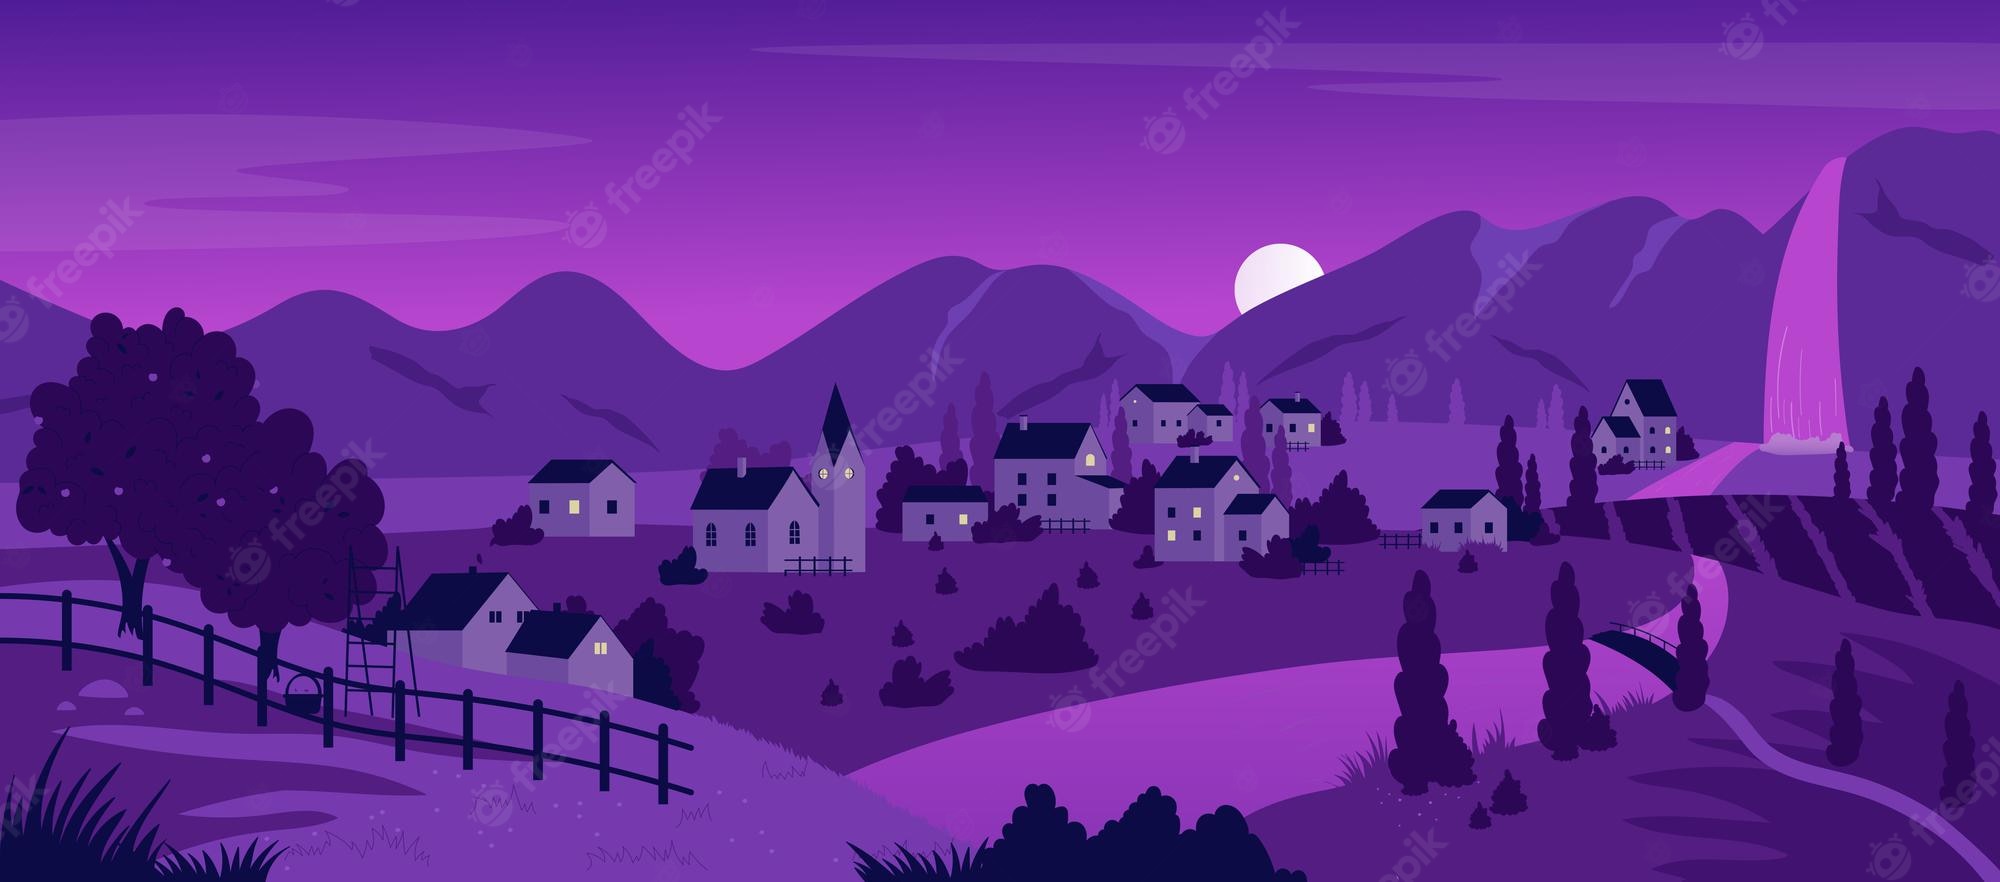 Night Mountains Summer Illustration Wallpapers